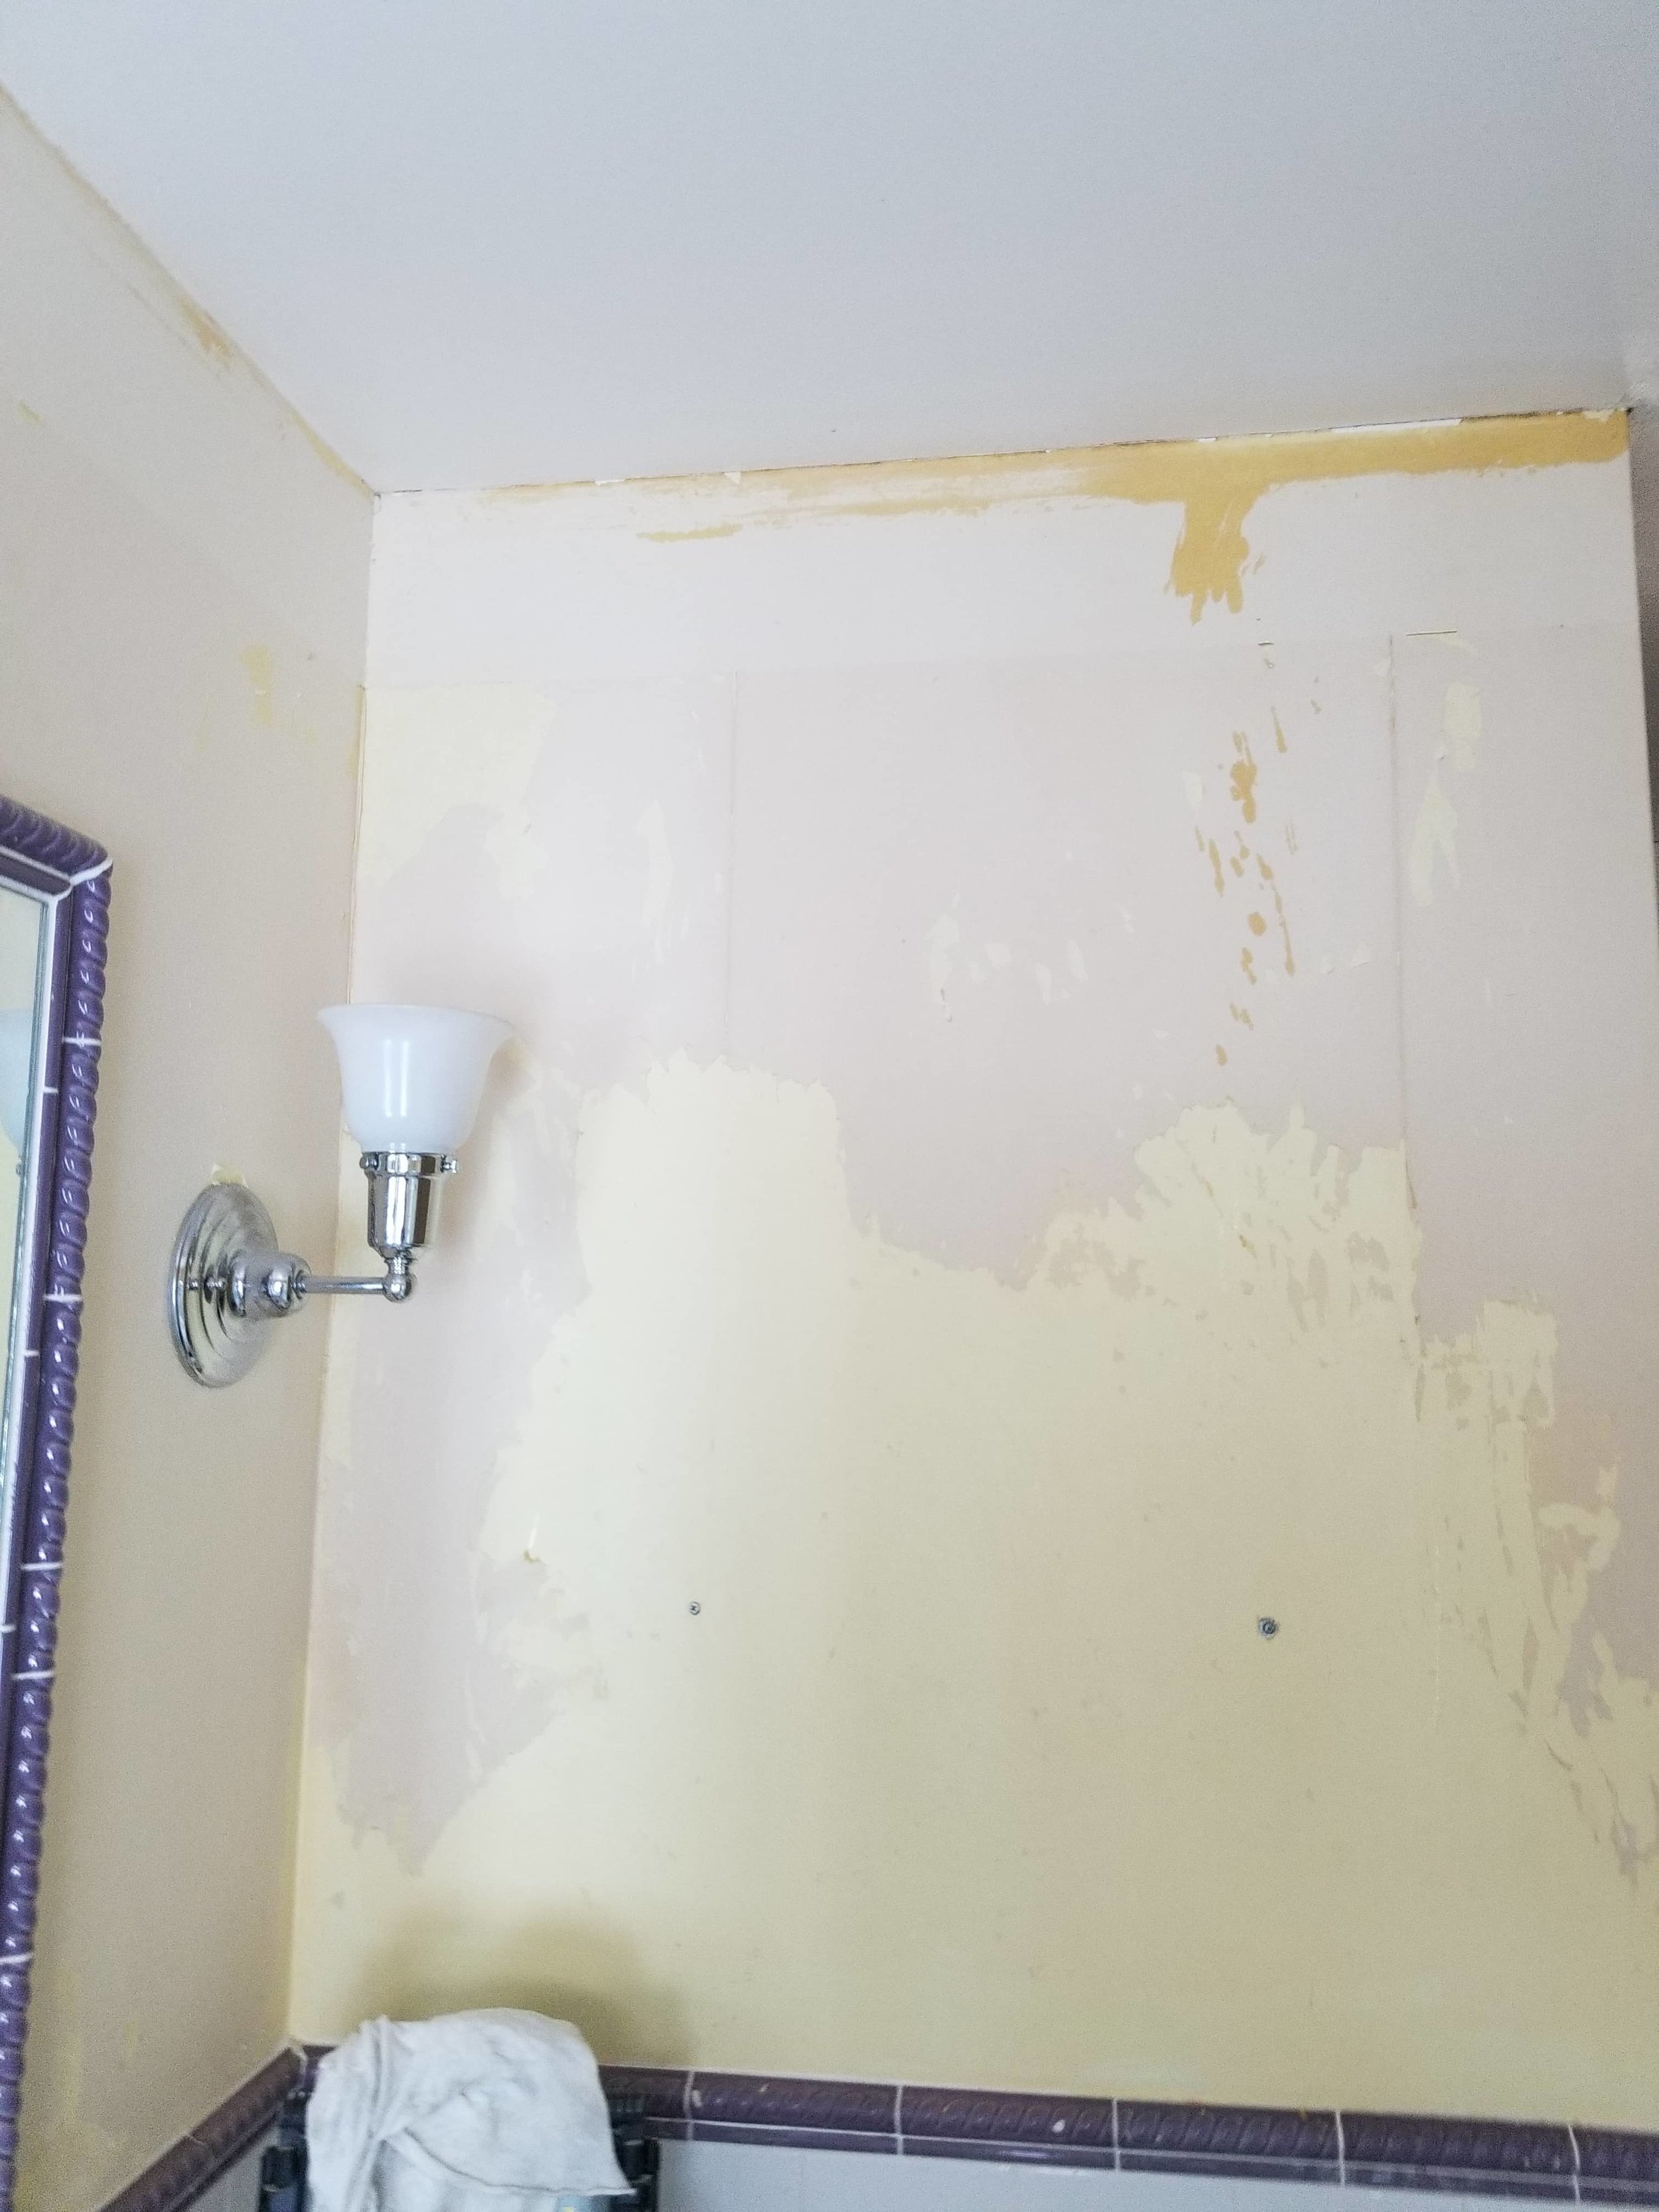 fullspectrum_painting_residential_bathroom_remodel_before_norwich_vt-min.jpg